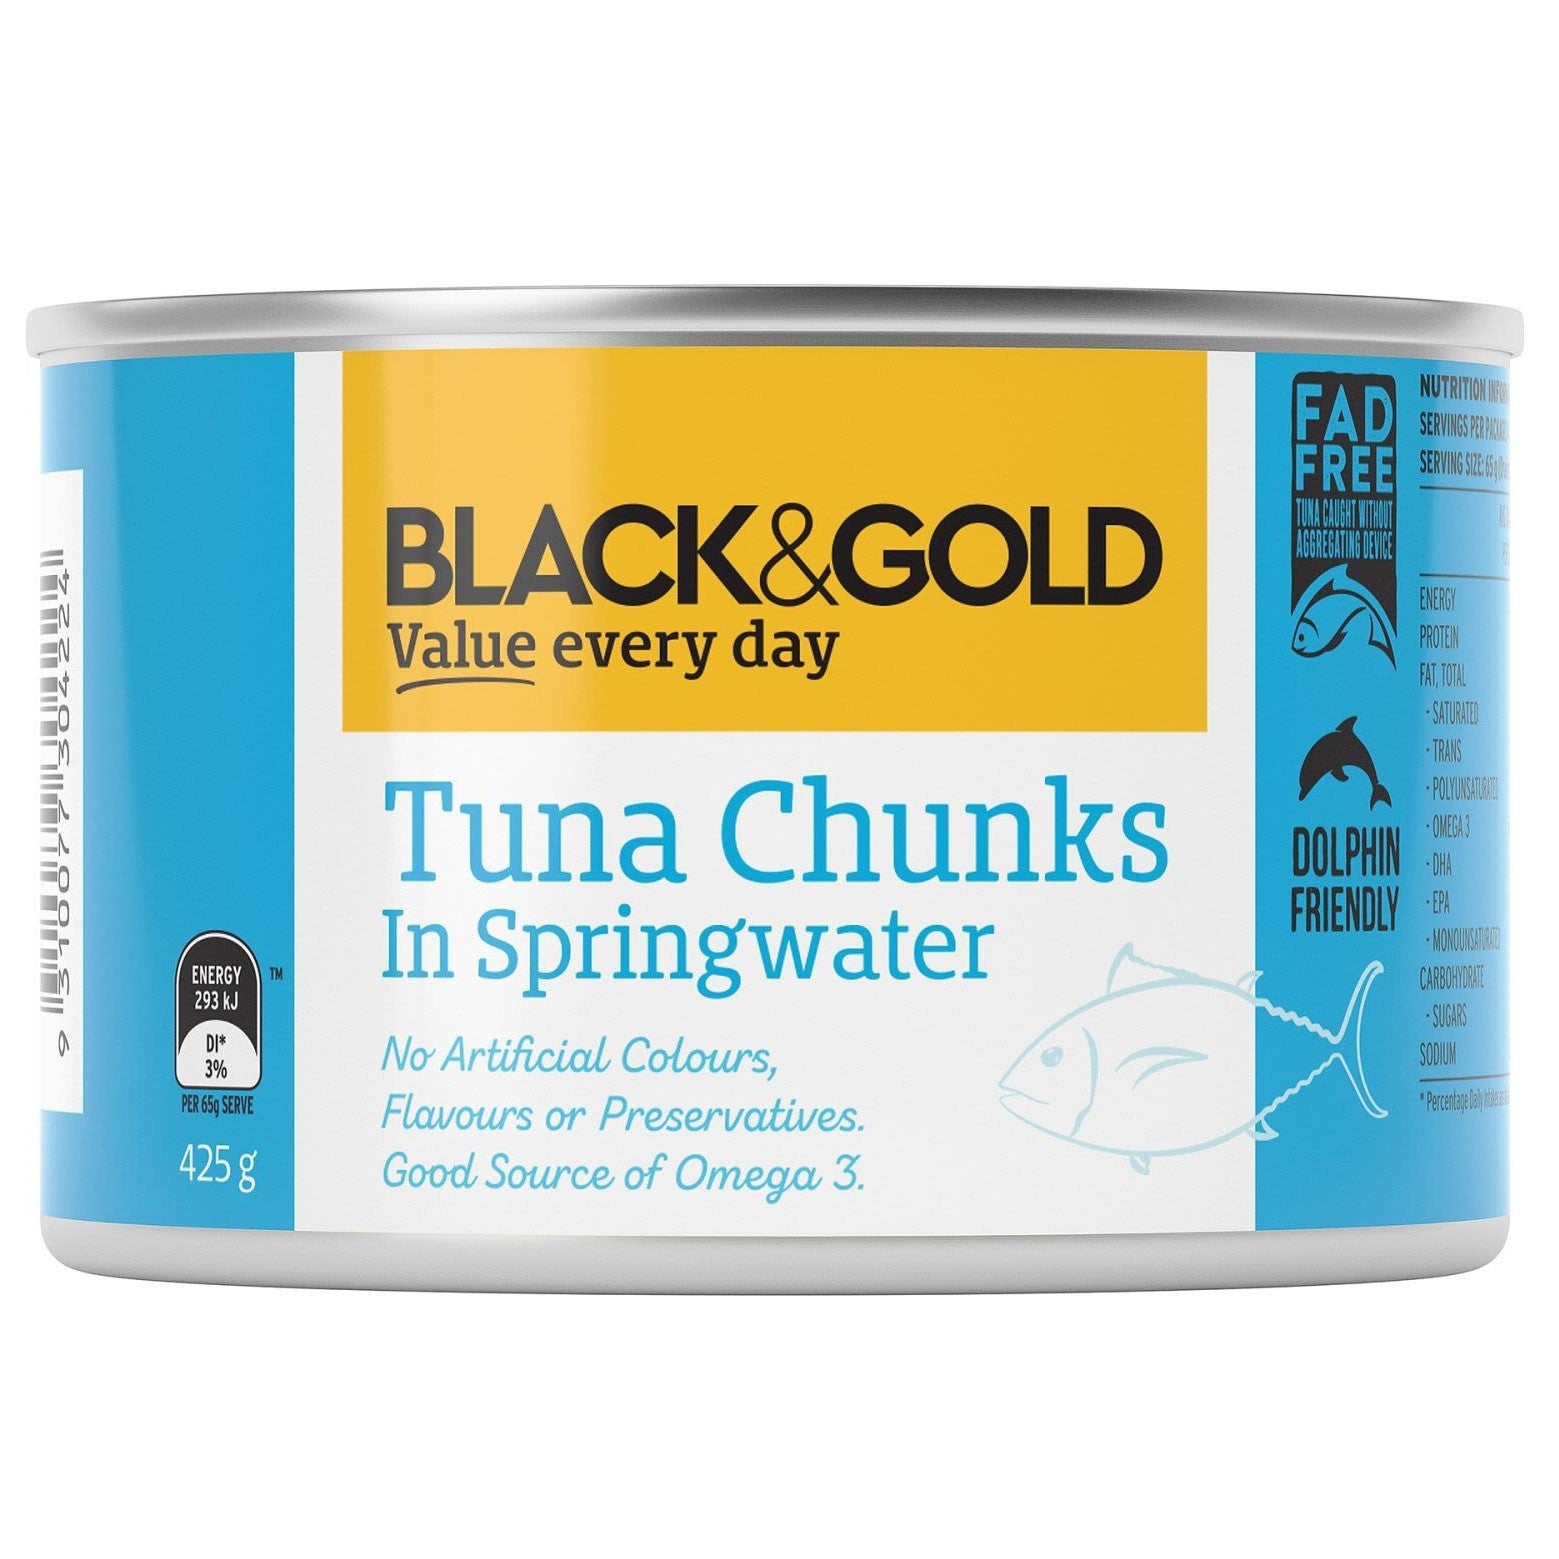 Black/Gold Tuna Chunks in Springwater 425g